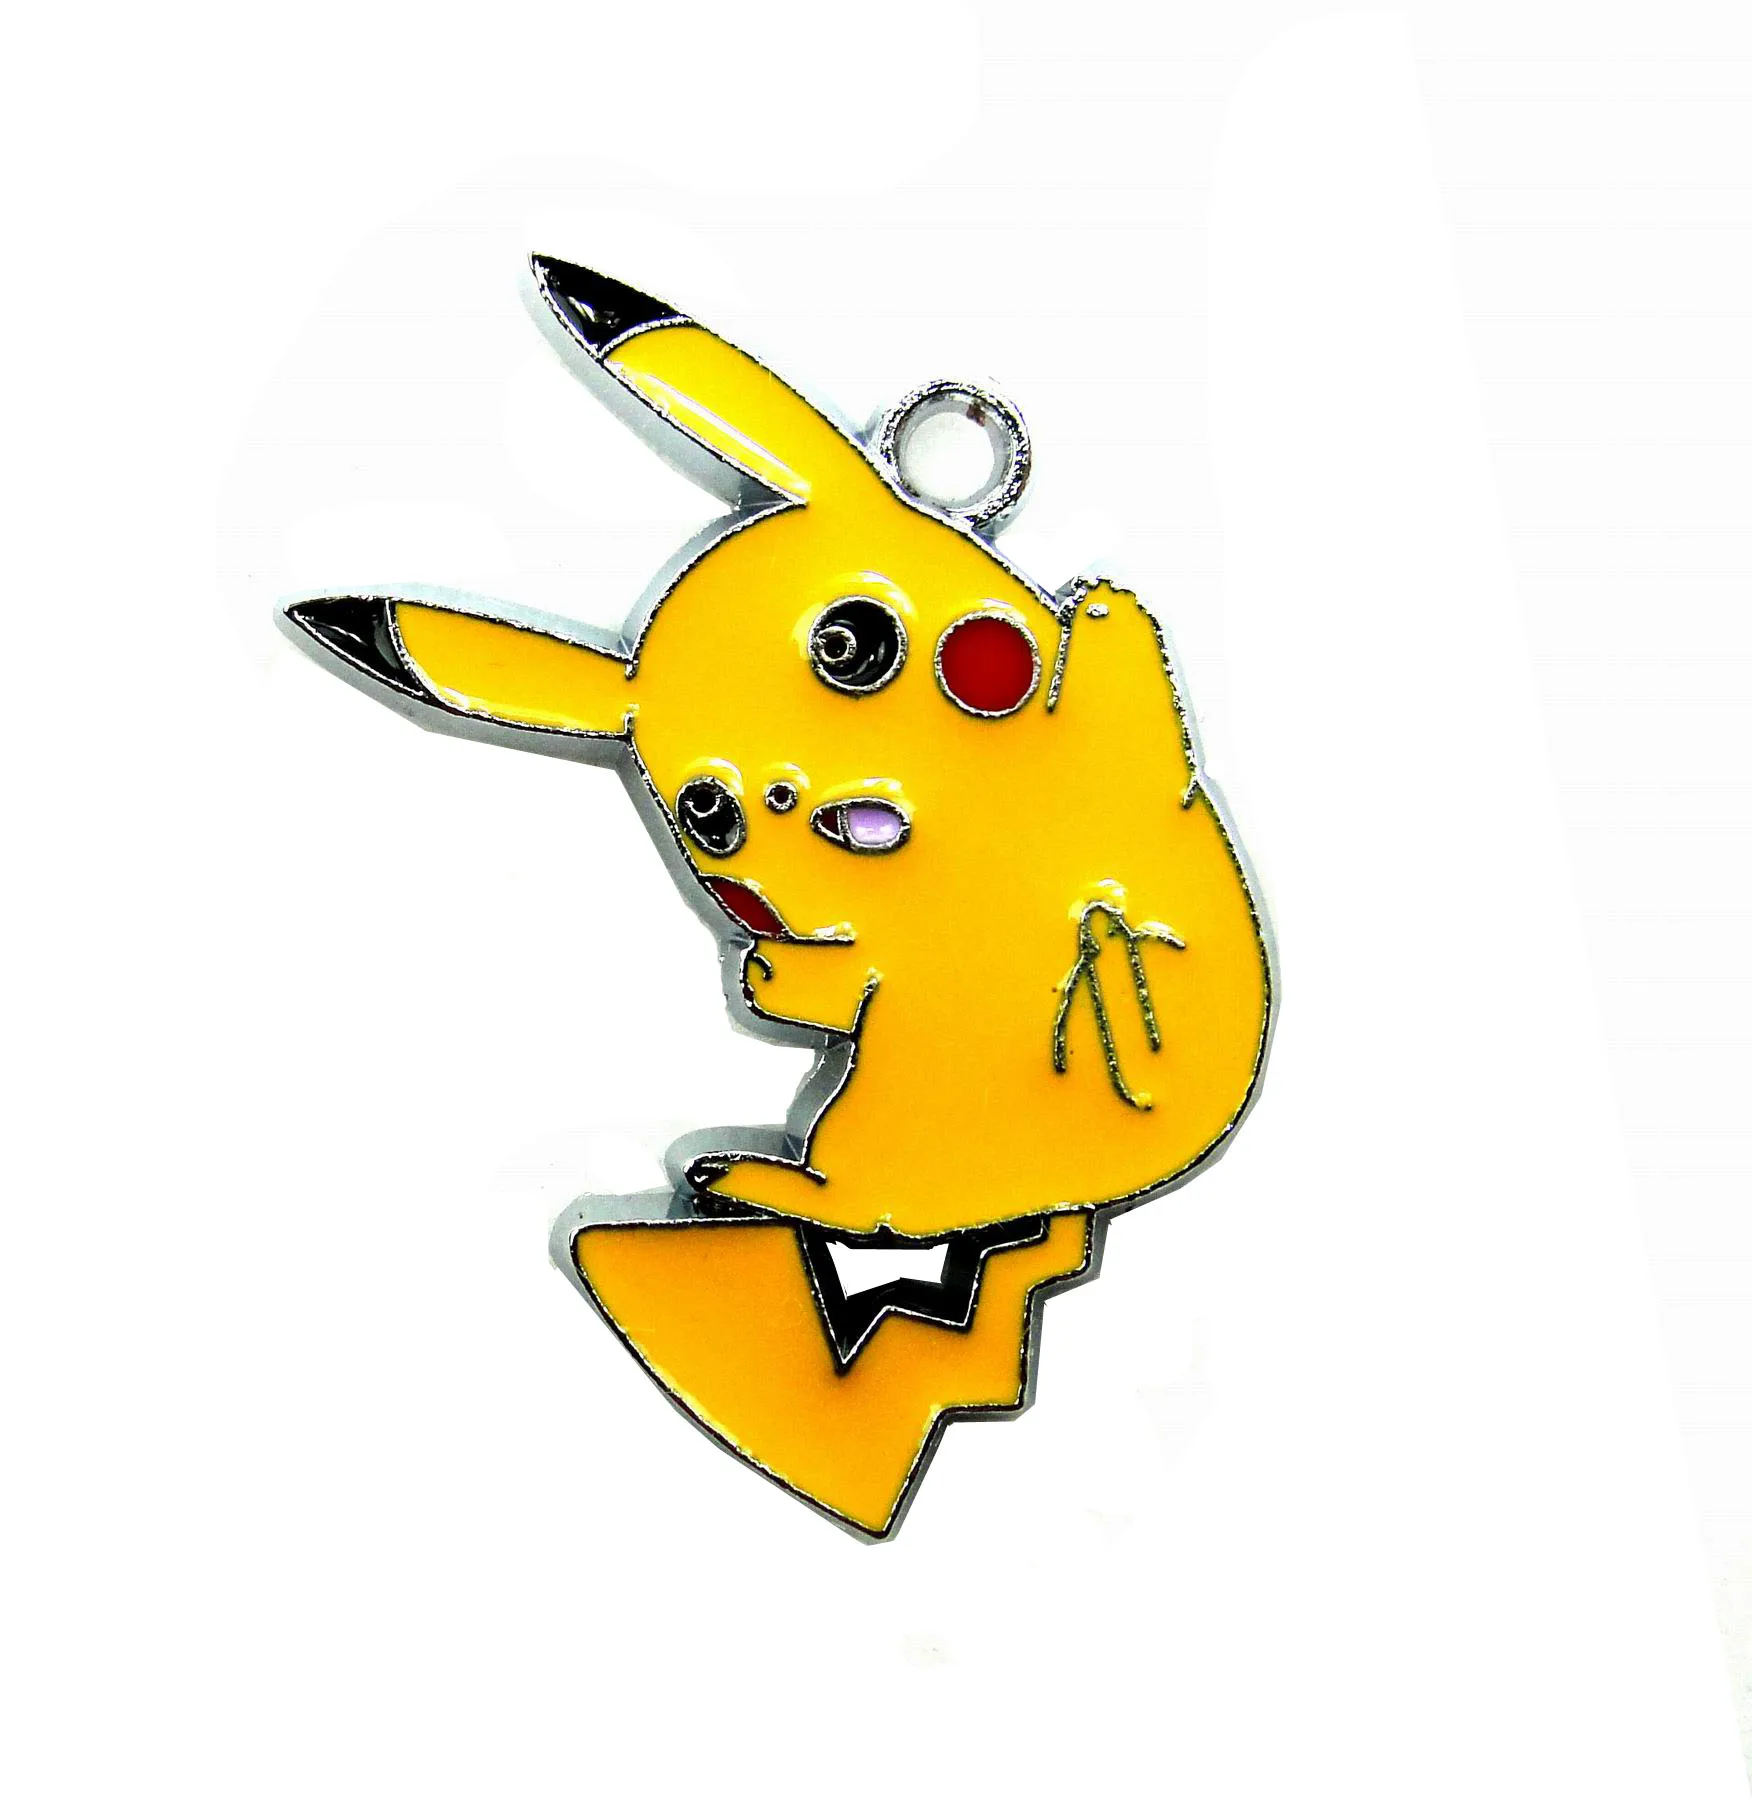 Hot 20pcs Pokemon Pikachu Cartoon Anim Charms Pendants Jewelry Making DIY Christmas Gifts Free Shipping